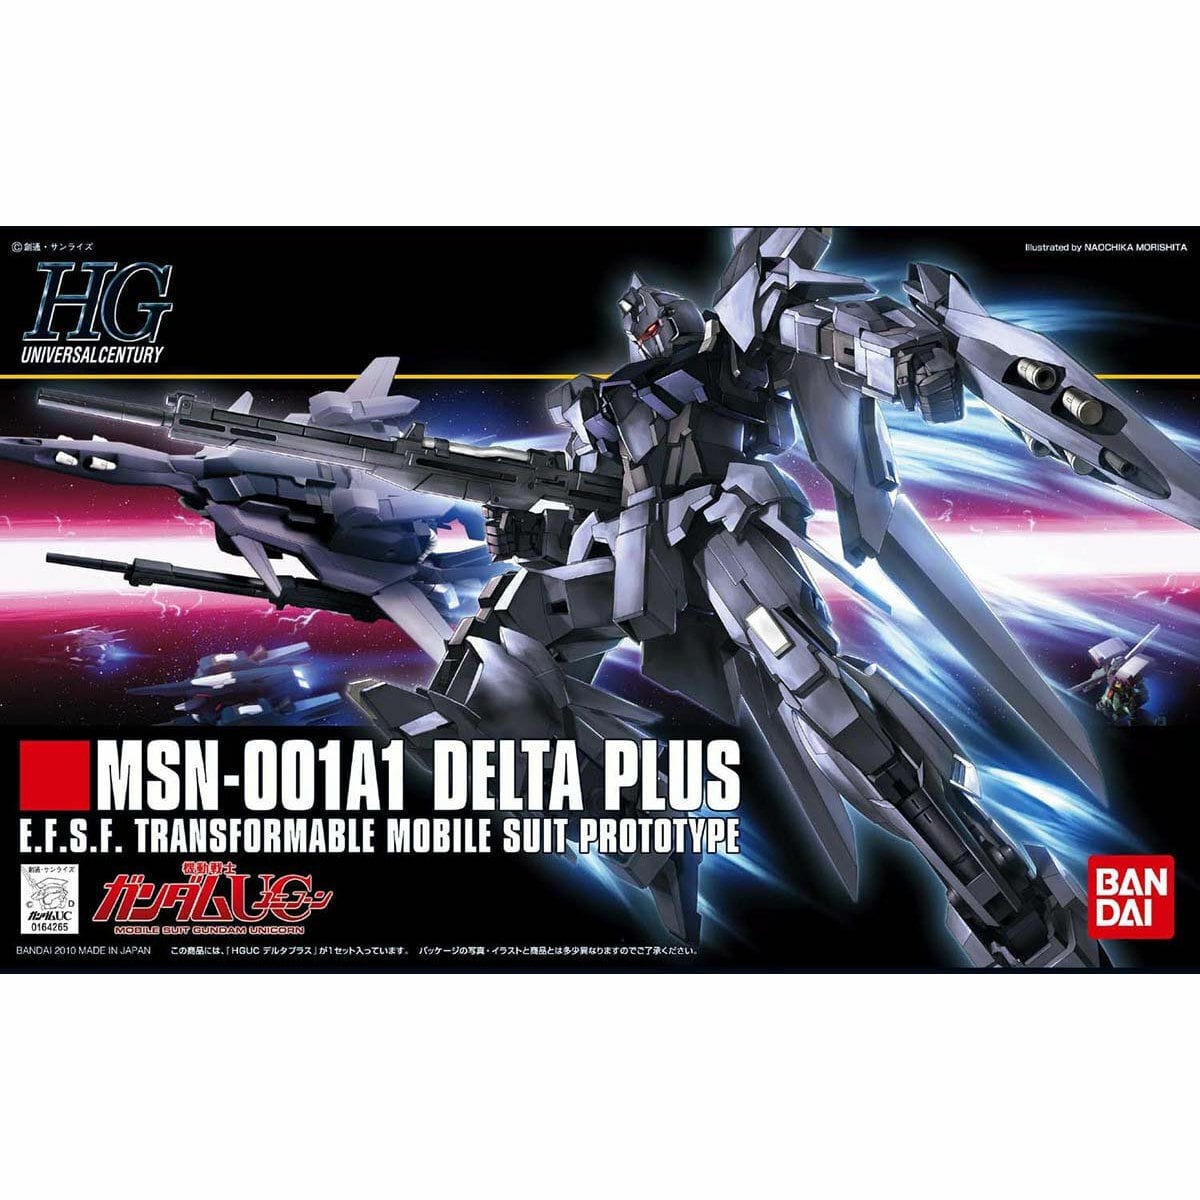 Bandai: Gundam Universal Century - MSN-001A1 Delta Plus - Third Eye